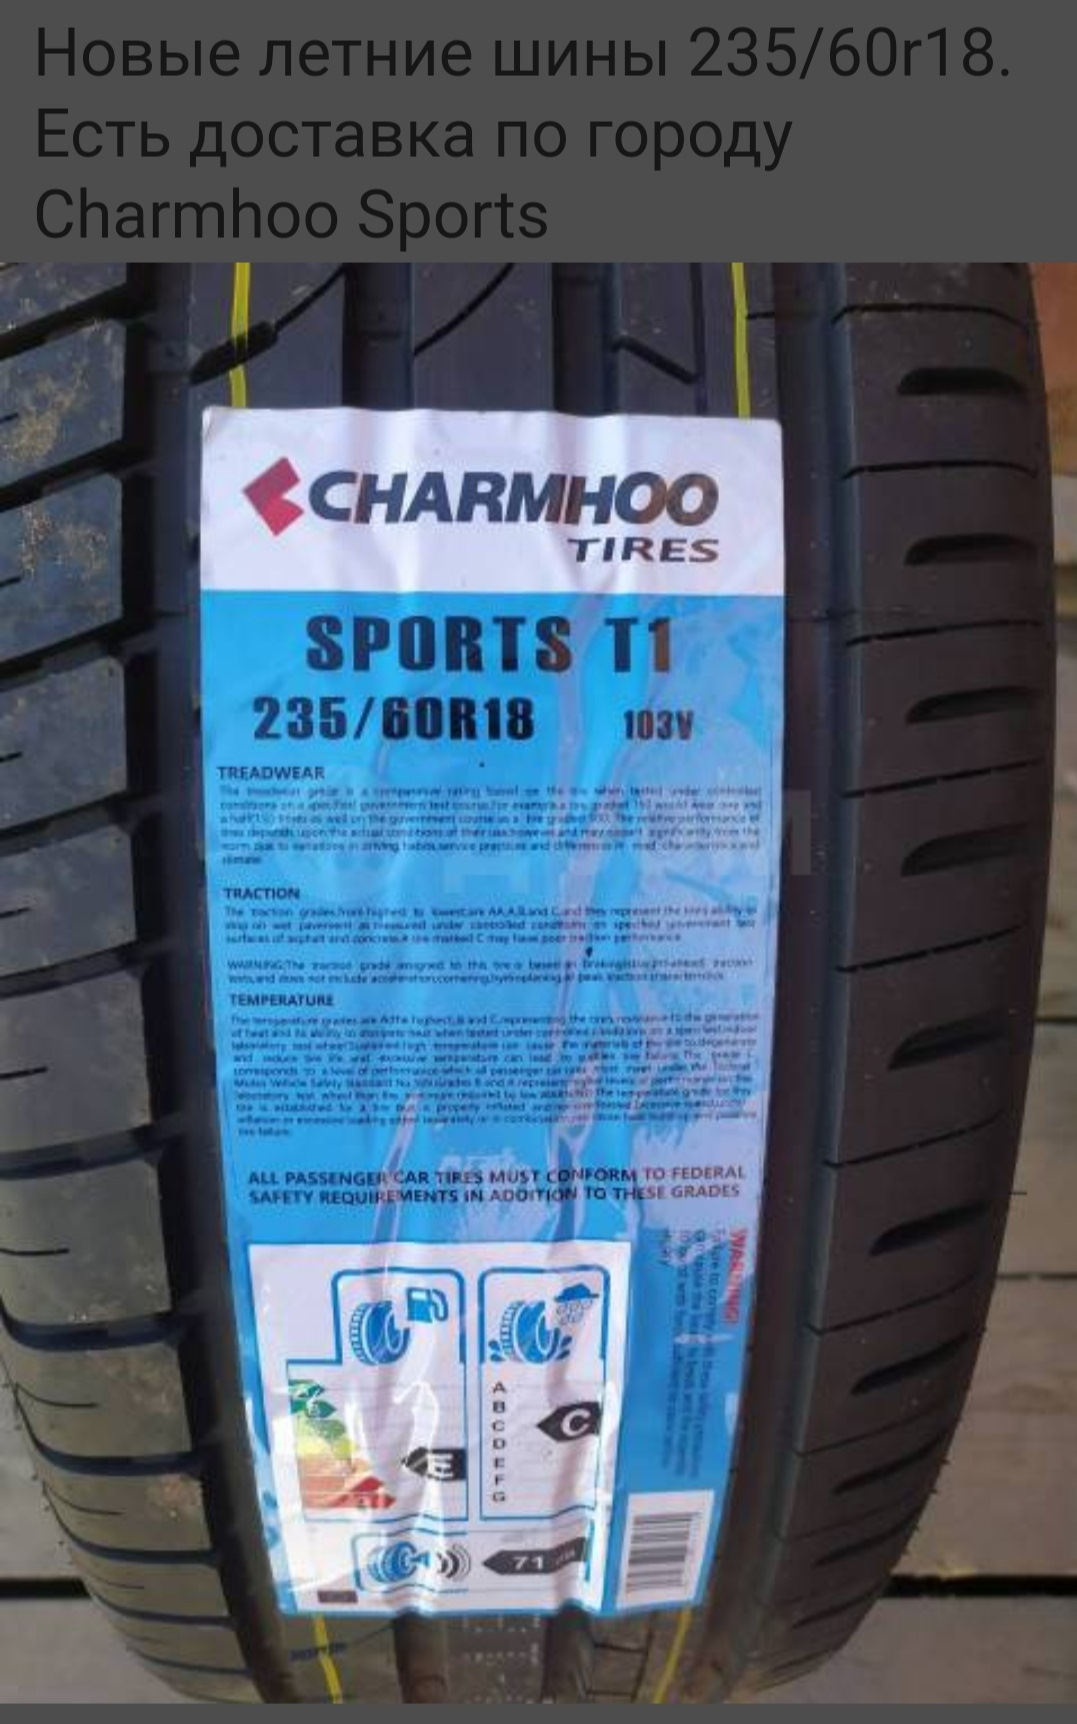 Charmhoo sports отзывы. 235/60r18 Charmhoo Sports t1. Charmhoo Sports t1 шины. Charmhoo Sport t1 235/60 r18. 235/45r17 Charmhoo Sports t1.